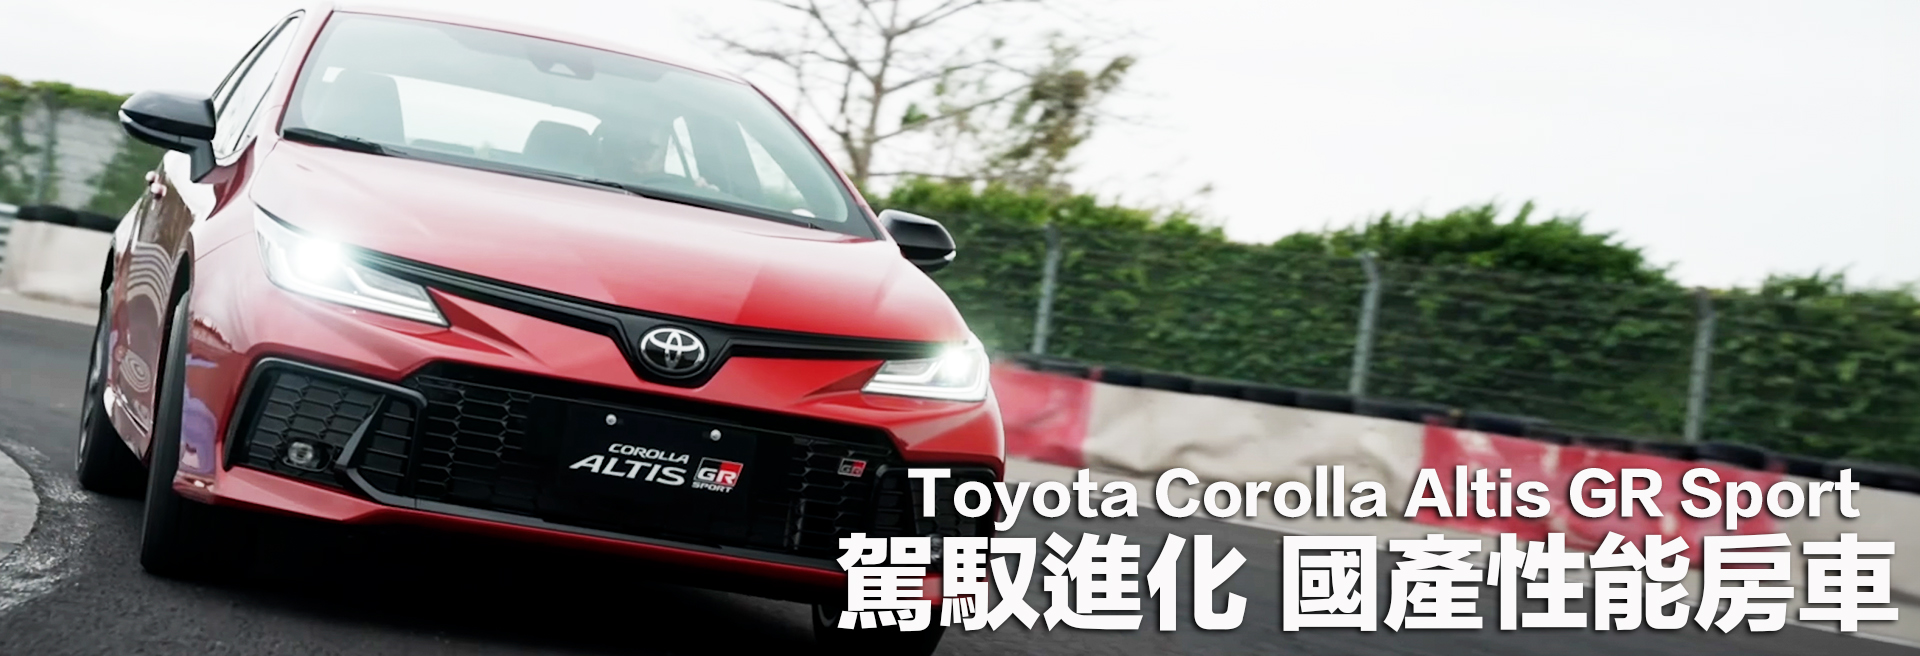 Toyota Corolla Altis GR Sport